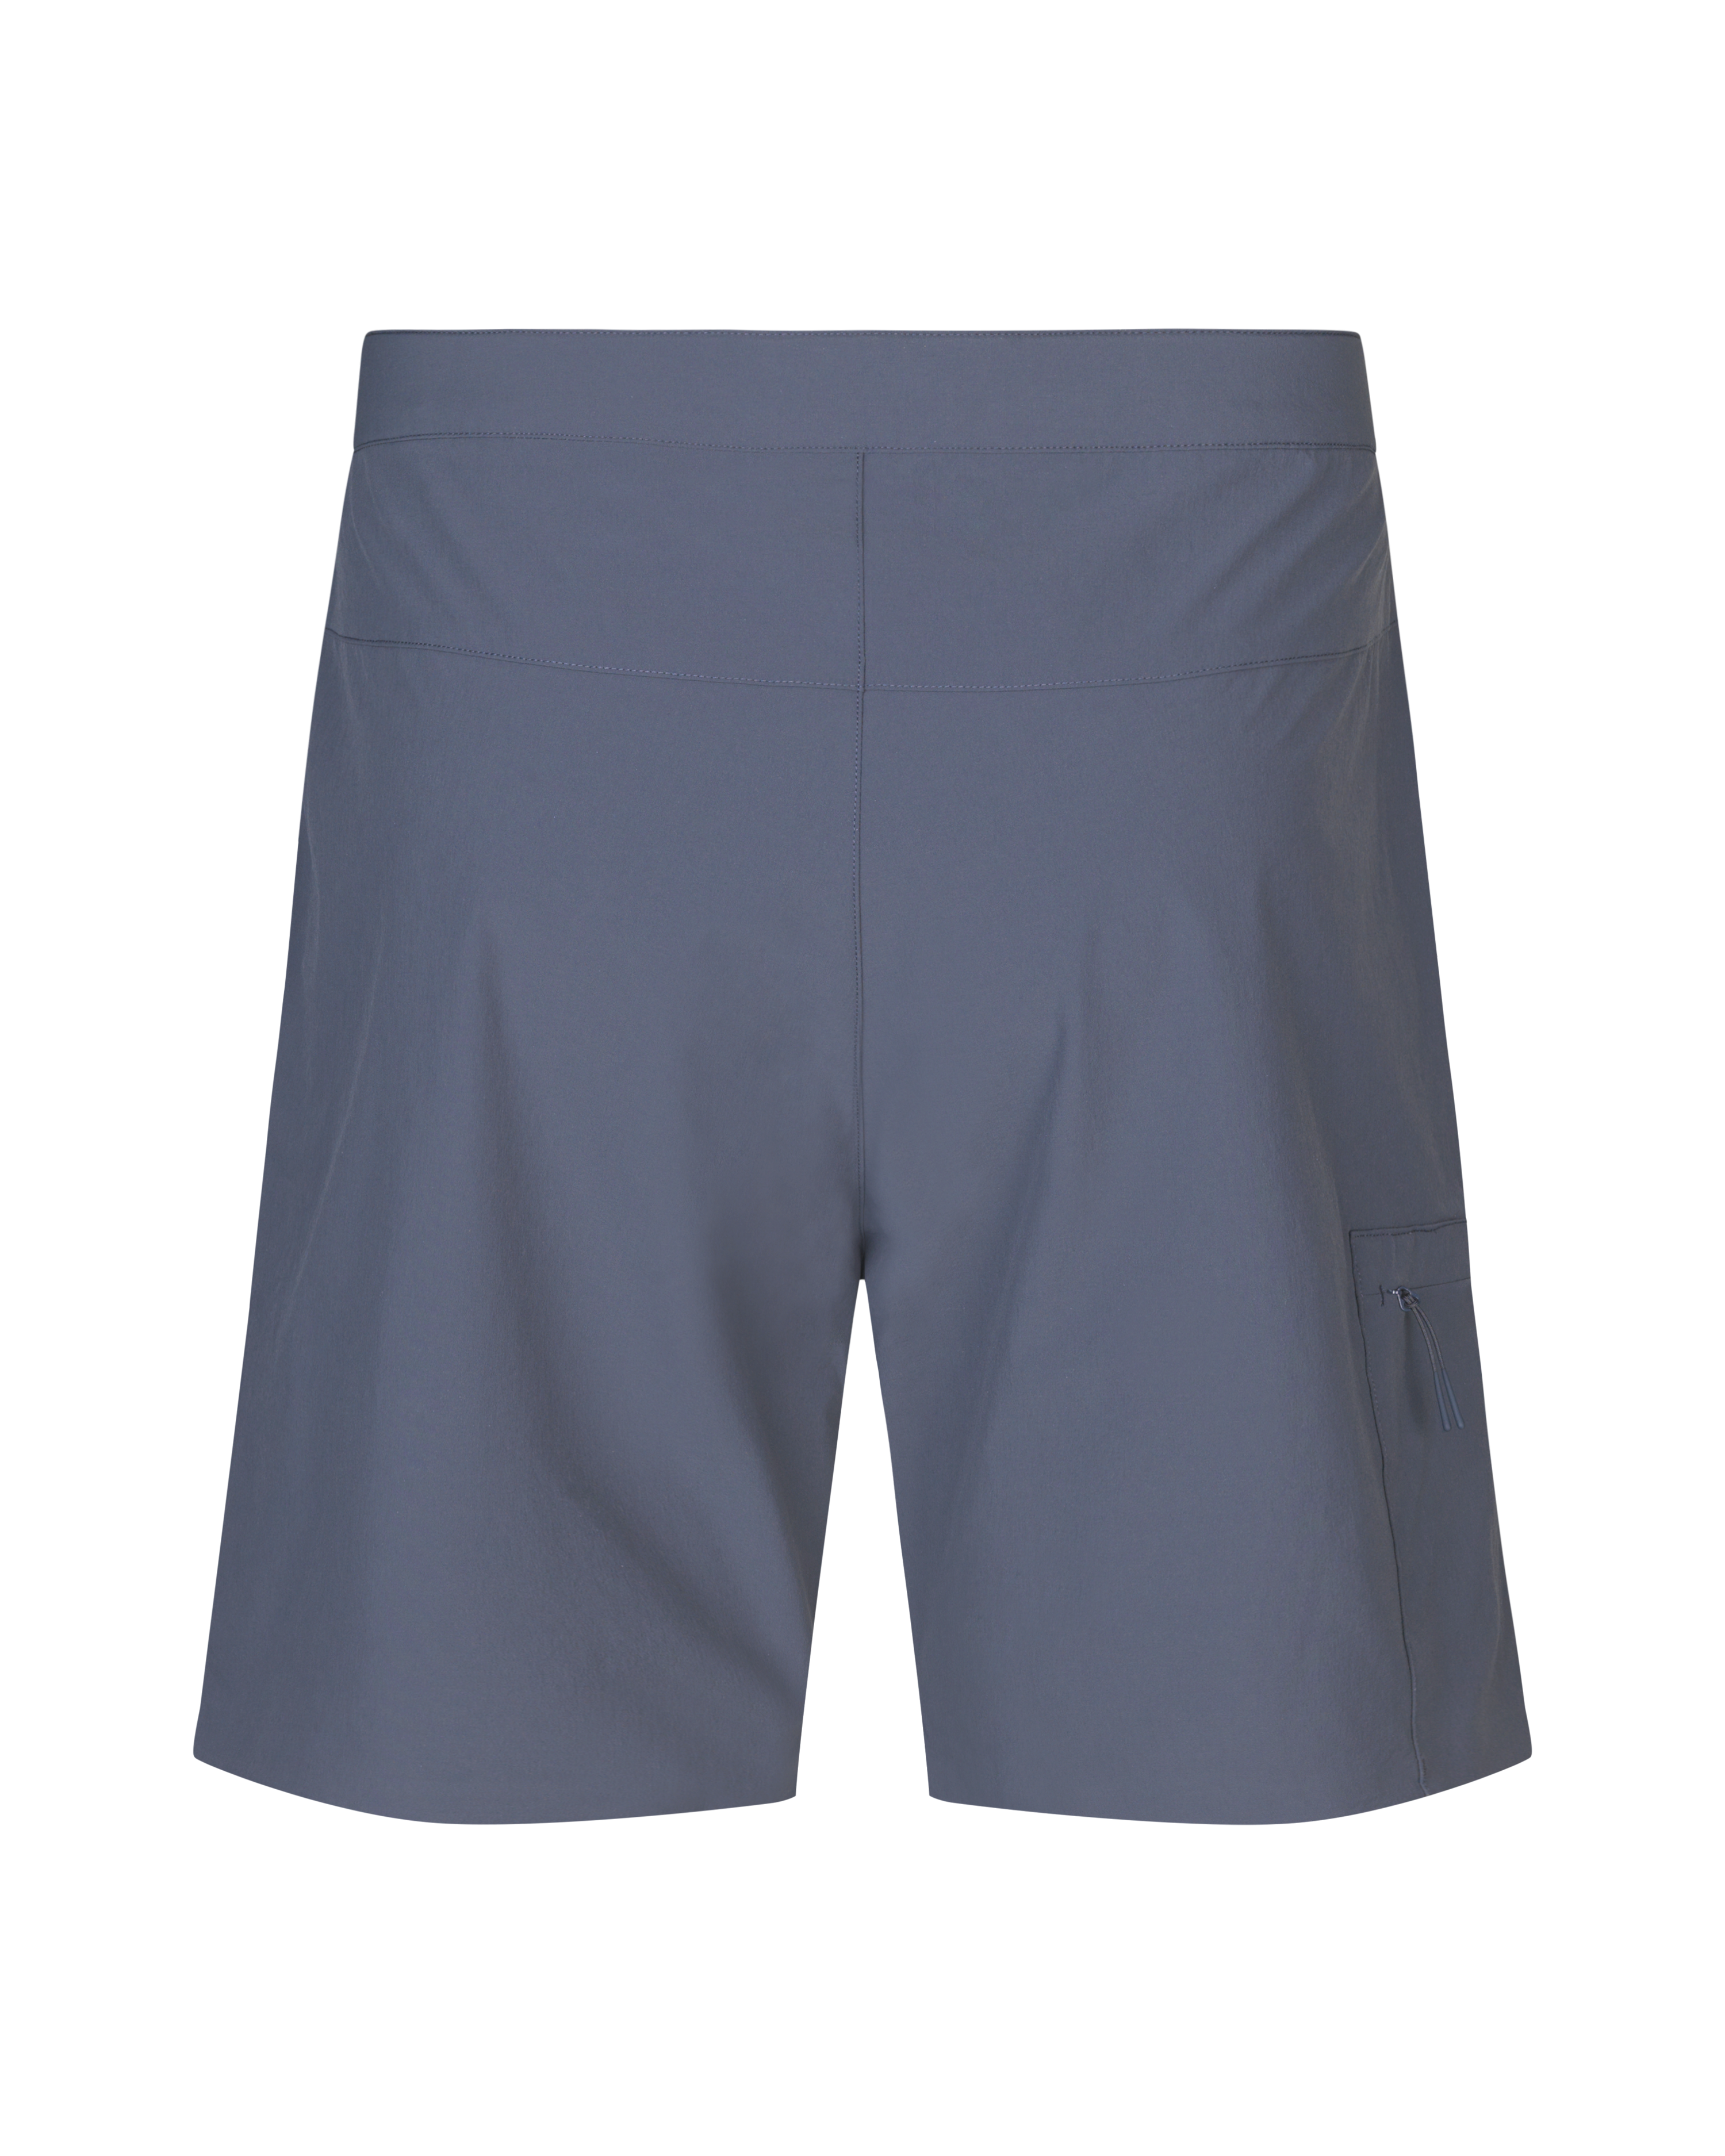 Off-Race Shorts - Classic Blue